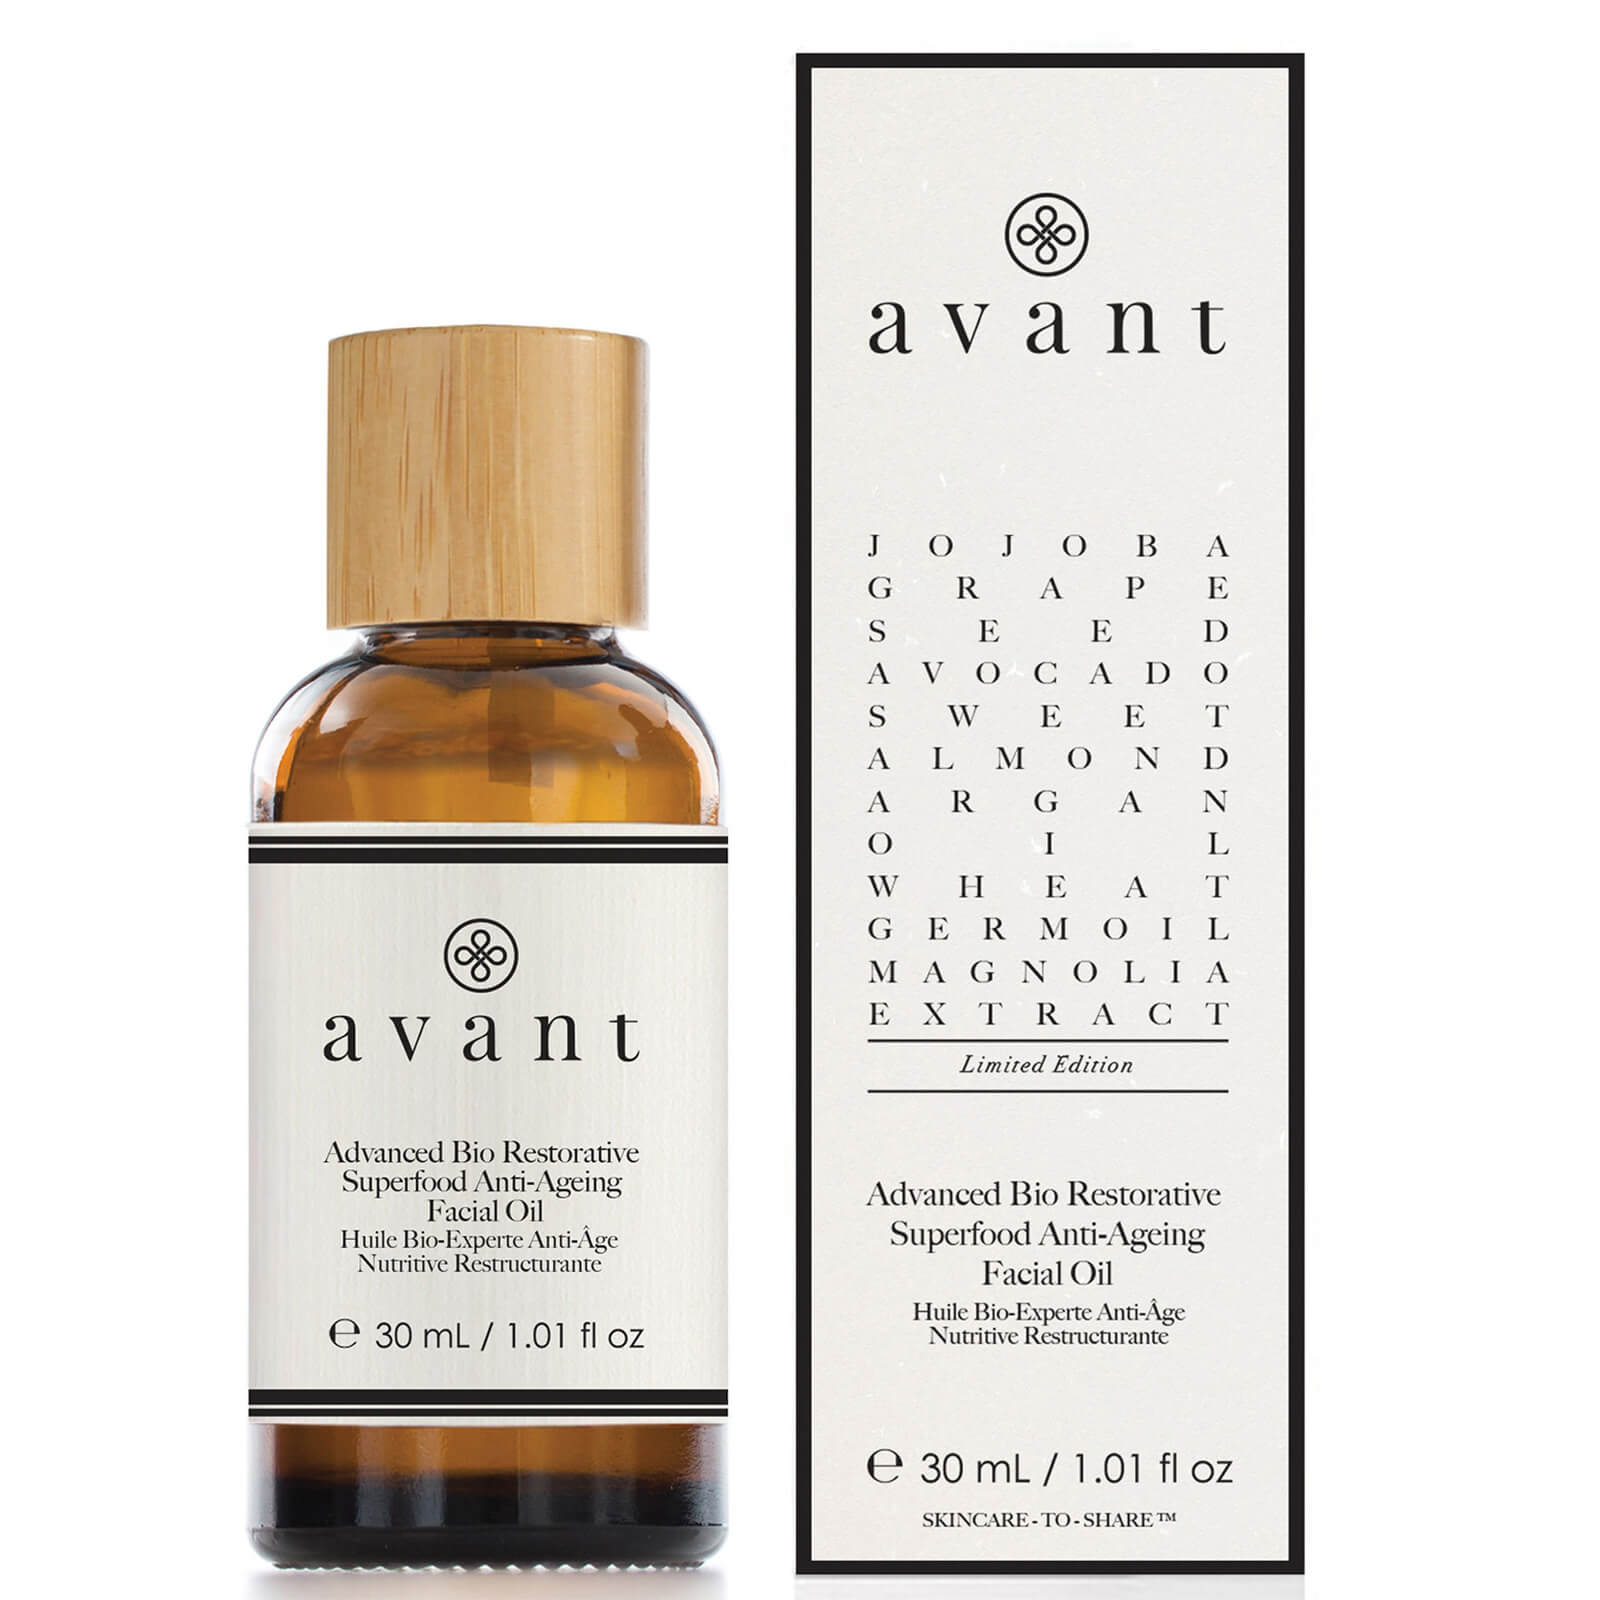 Avant Skincare Limited Edition Advanced Bio Restorative Superfood Facial Oil 1.01 Fl. oz